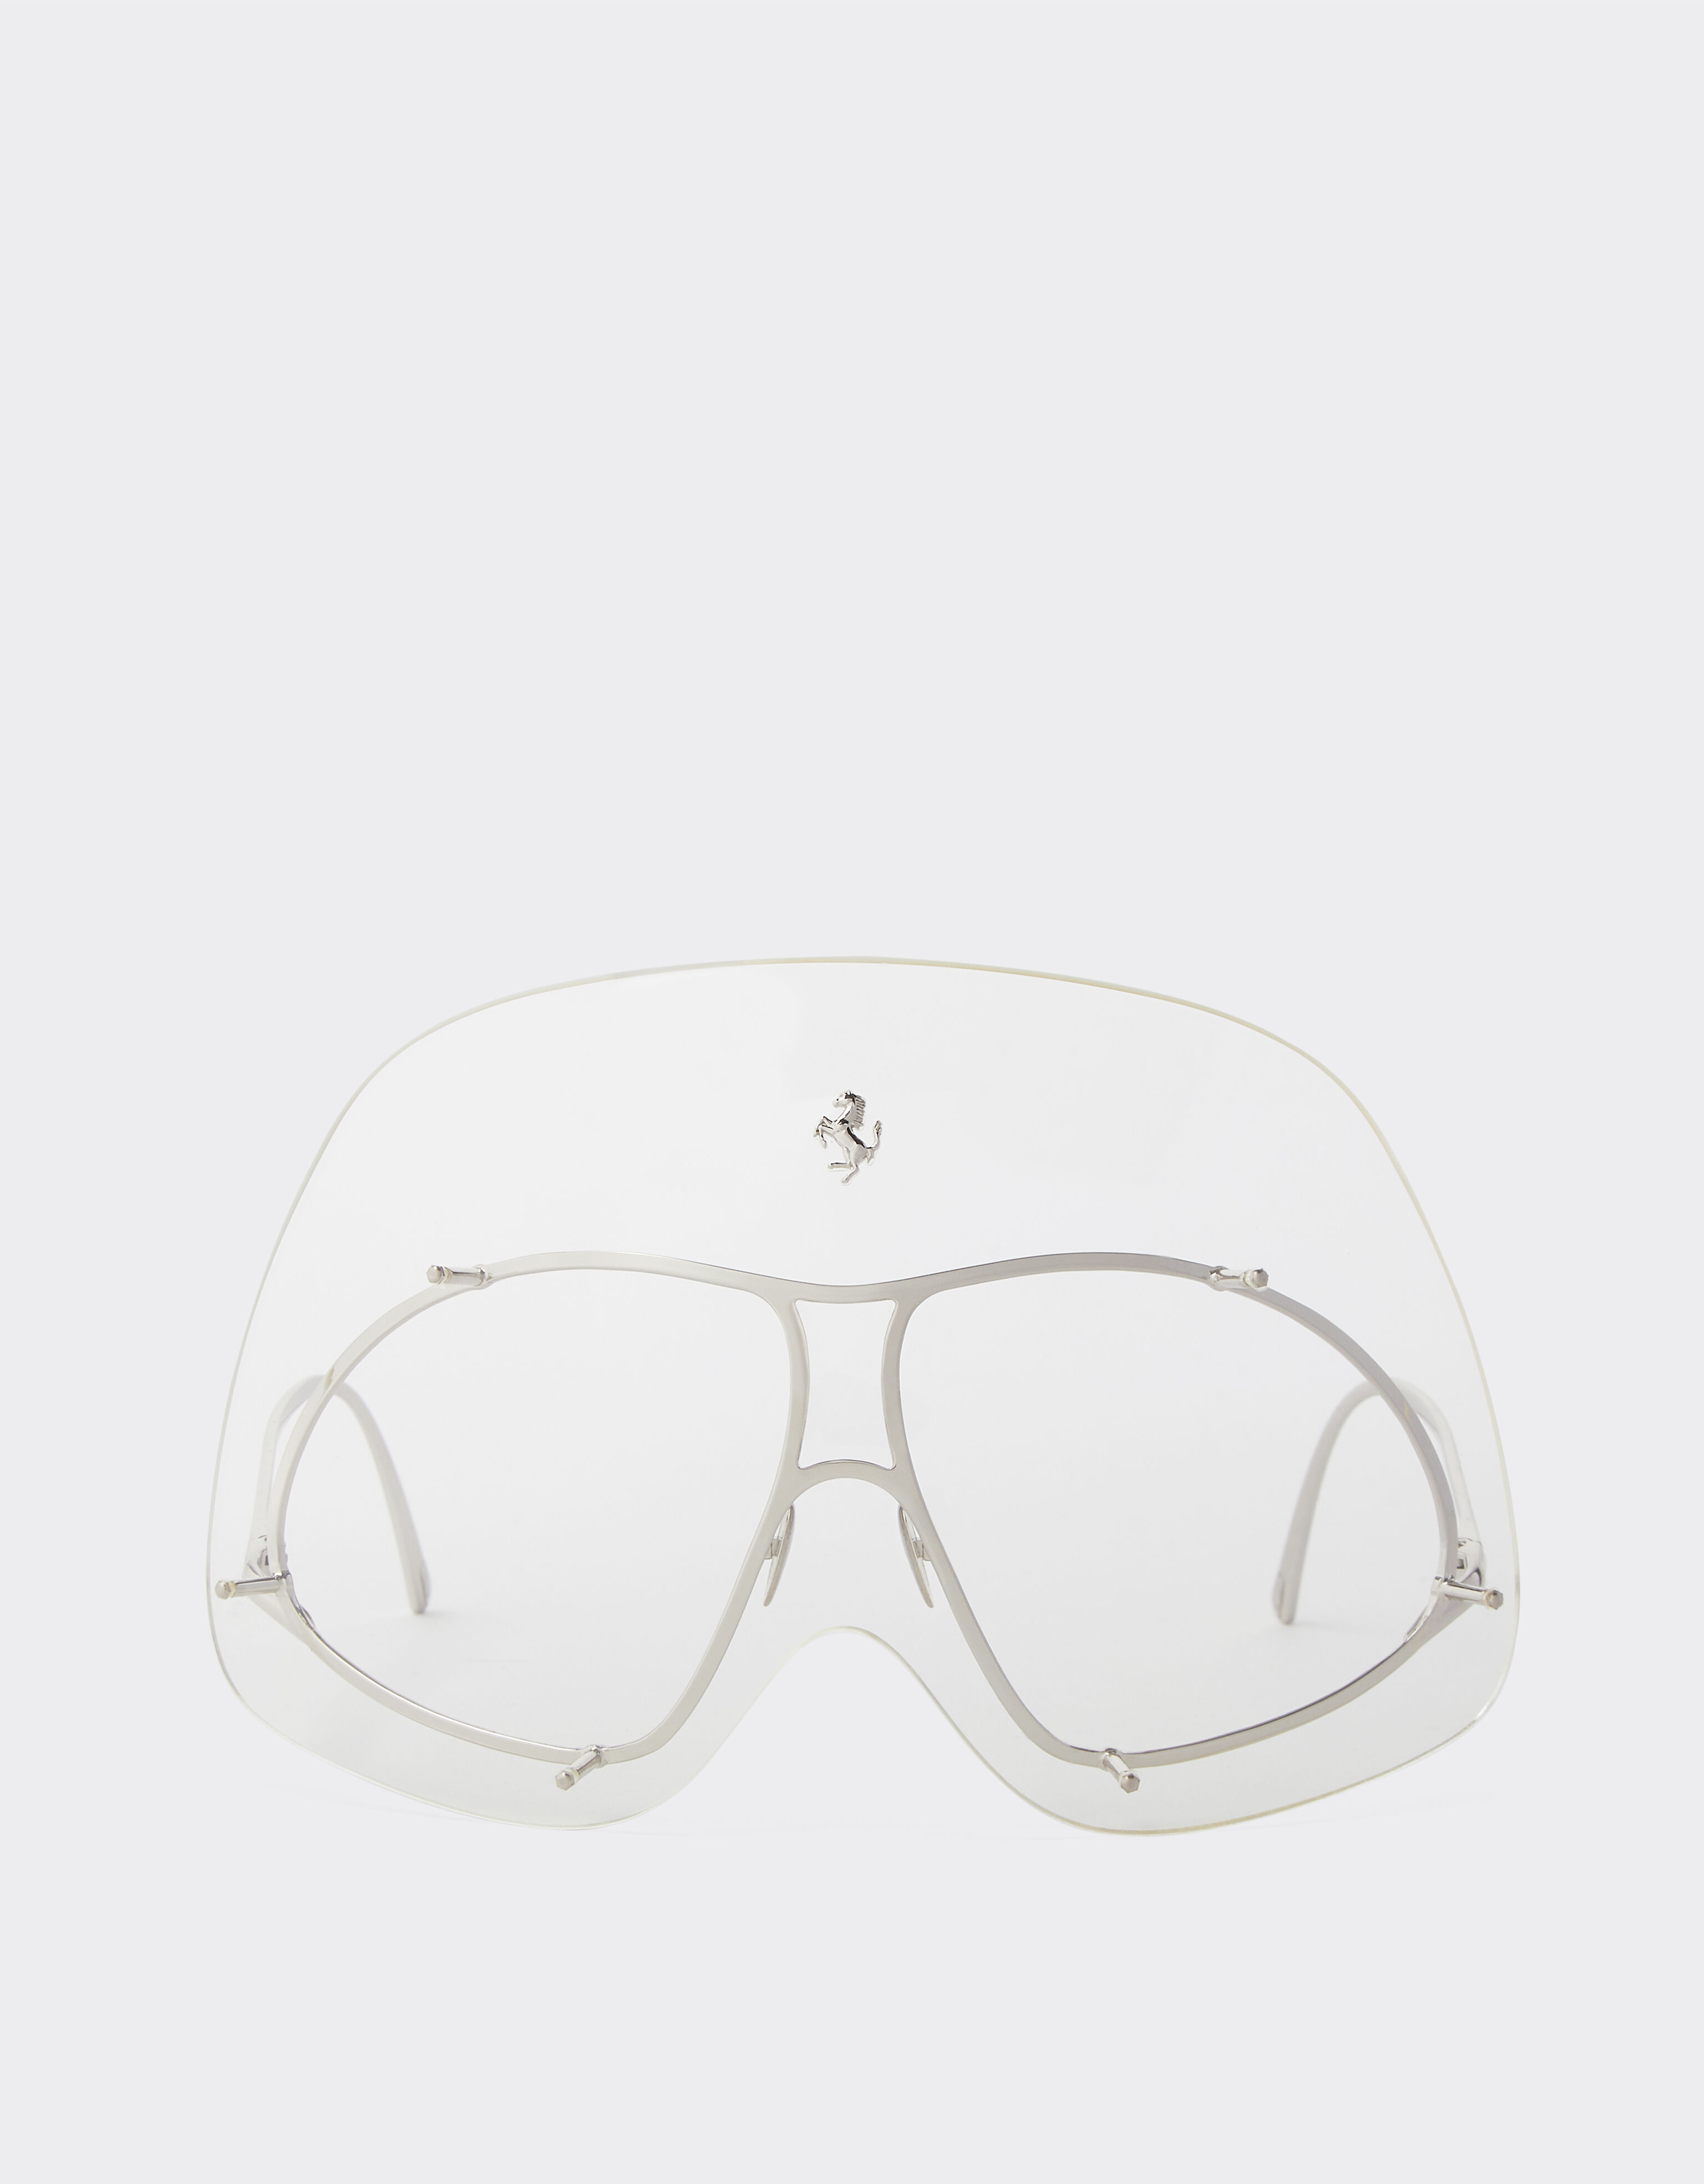 Ferrari Ferrari Limited Edition metal sunglasses with transparent shield Black F1201f